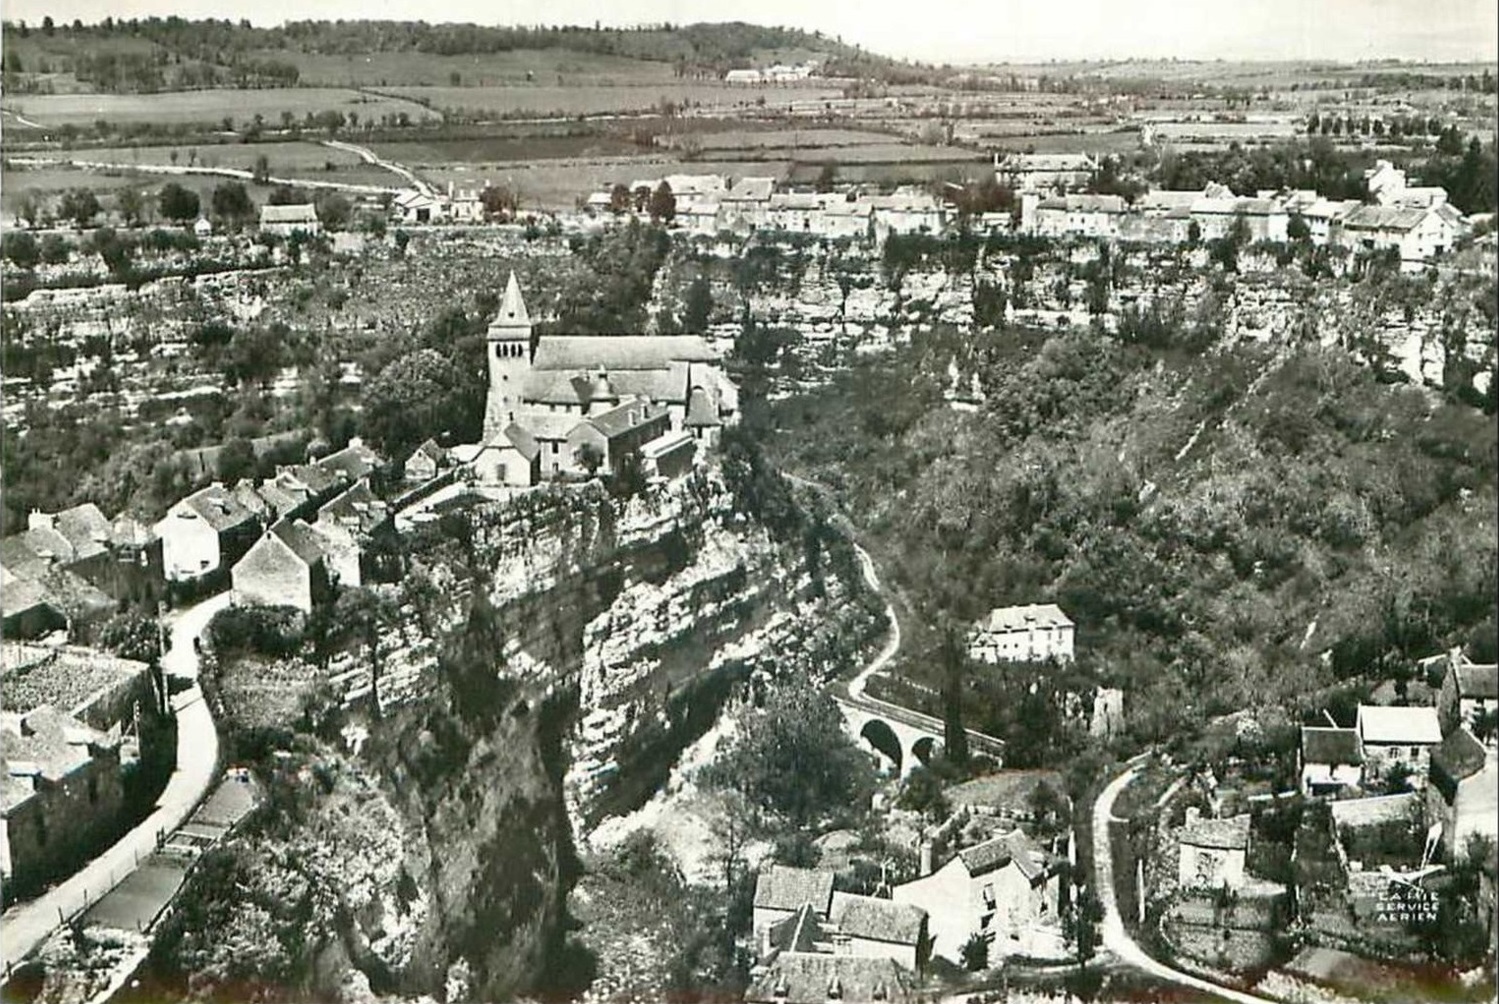 Rodelle (Aveyron)